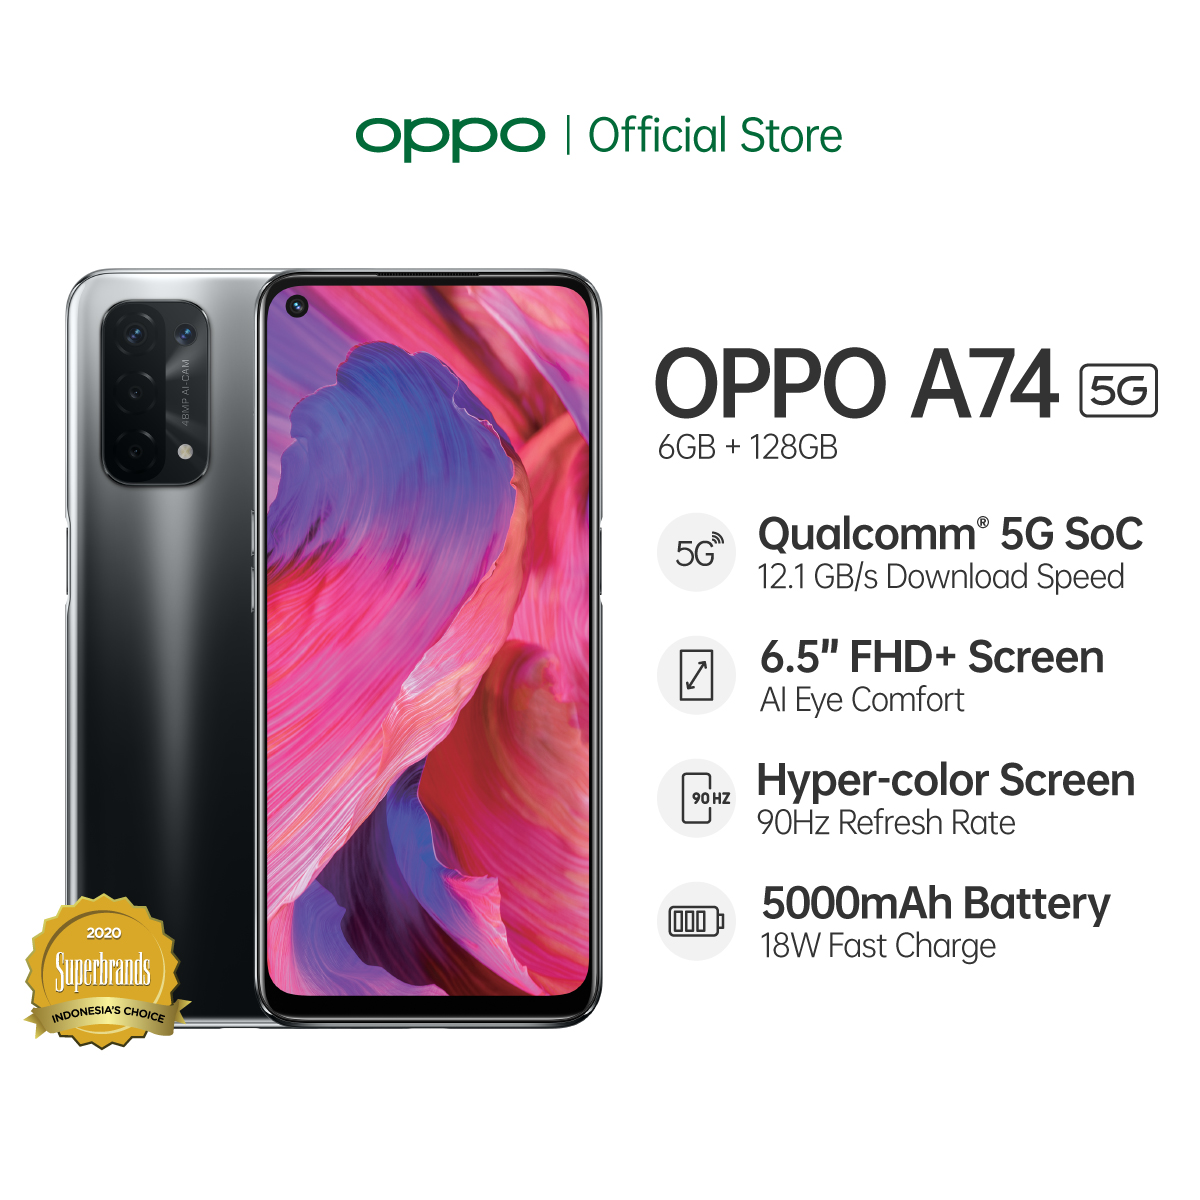 OPPO A74 5G 6/128GB [Qualcomm 5G SoC, 48 MP AI Quad Camera, 5000mAh, 90Hz Hyper-color Screen]